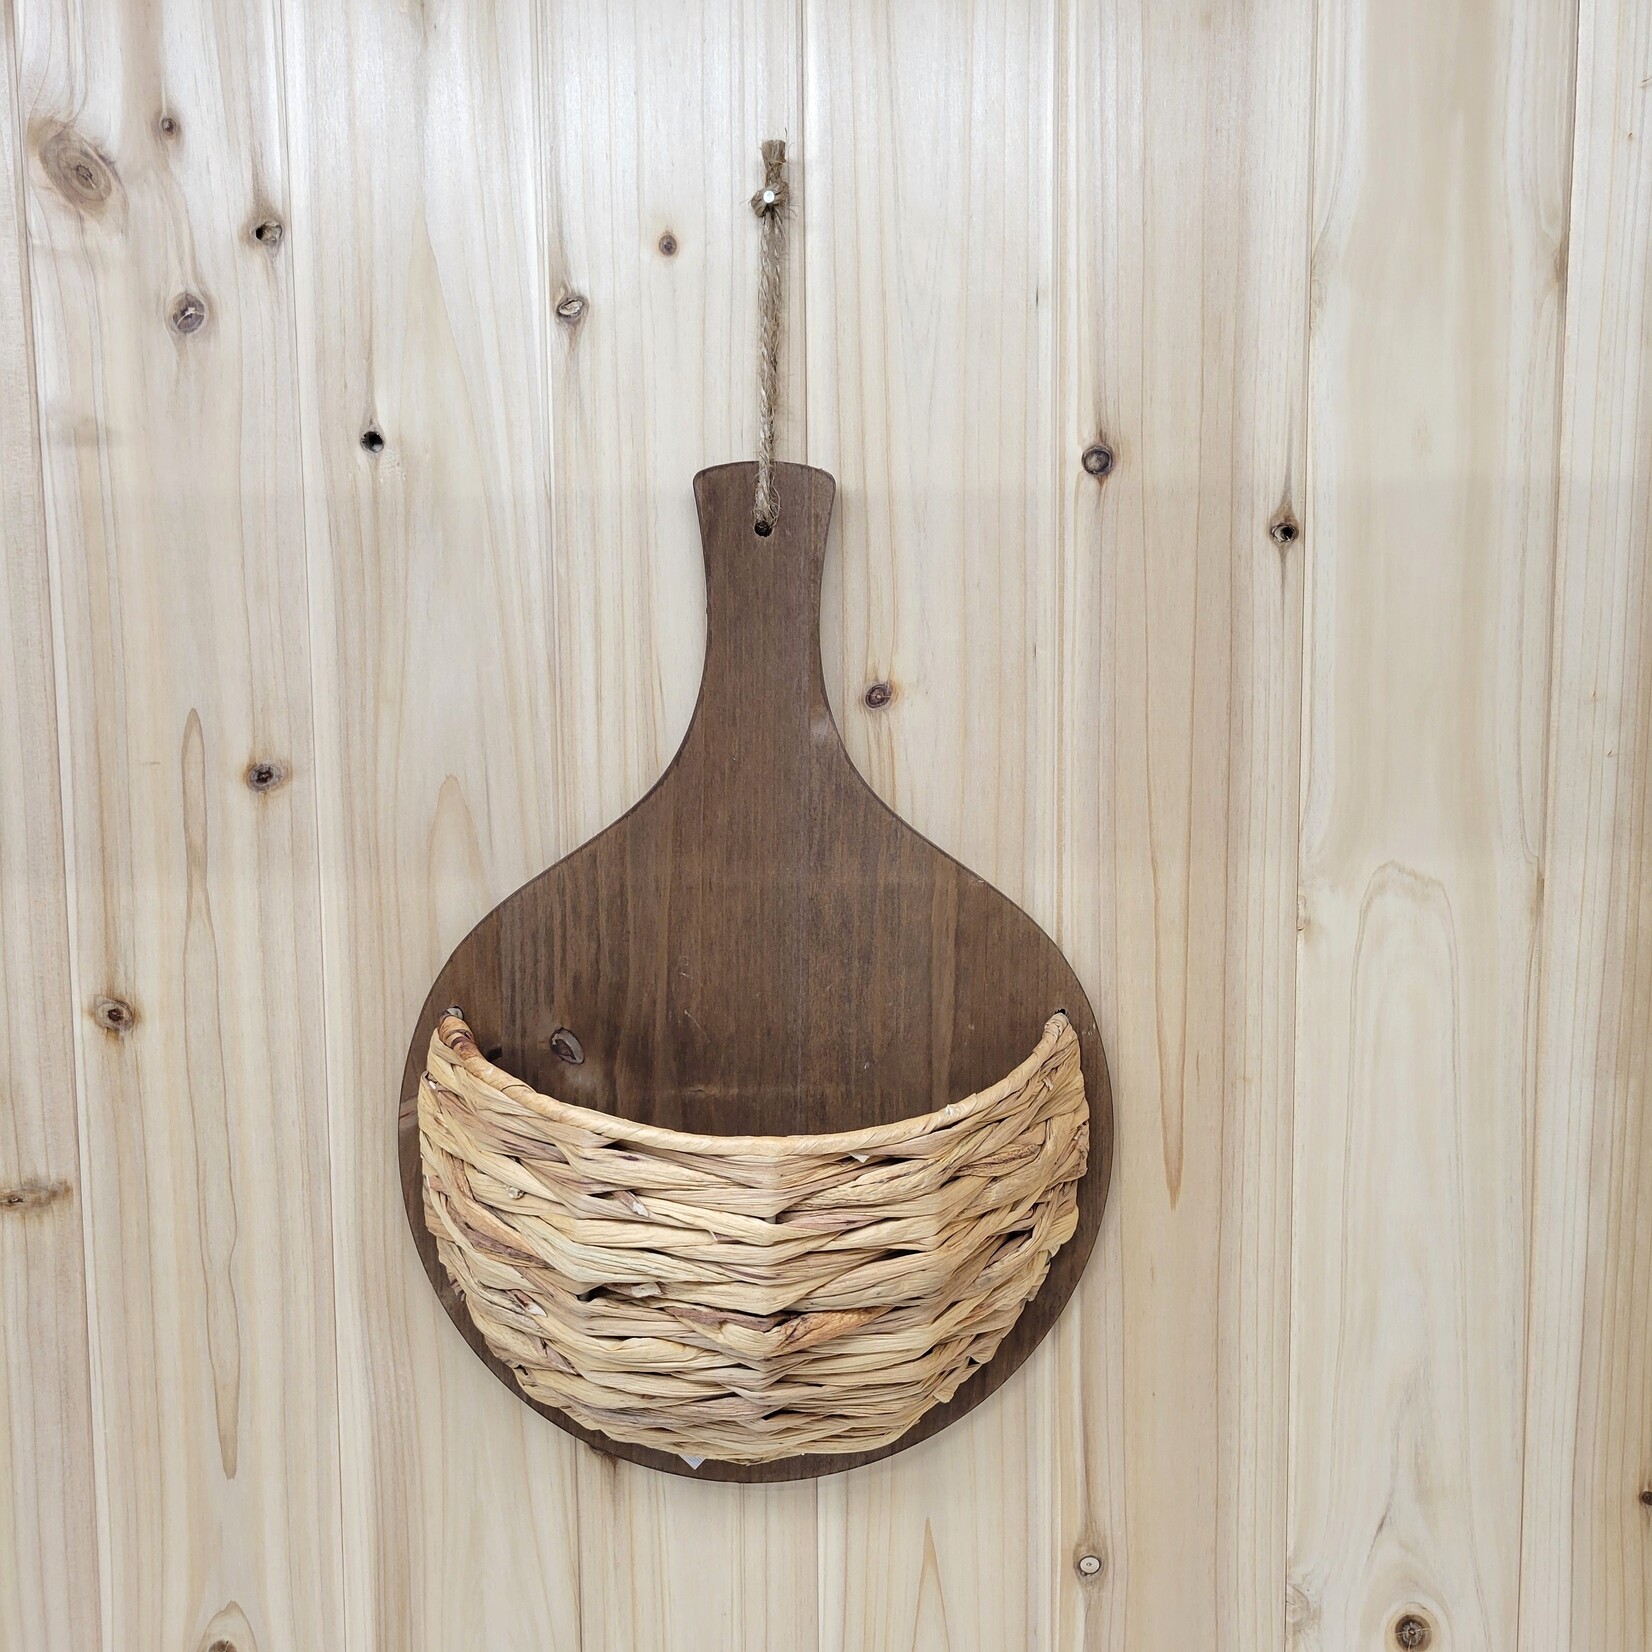 Hanging Wall Baskets